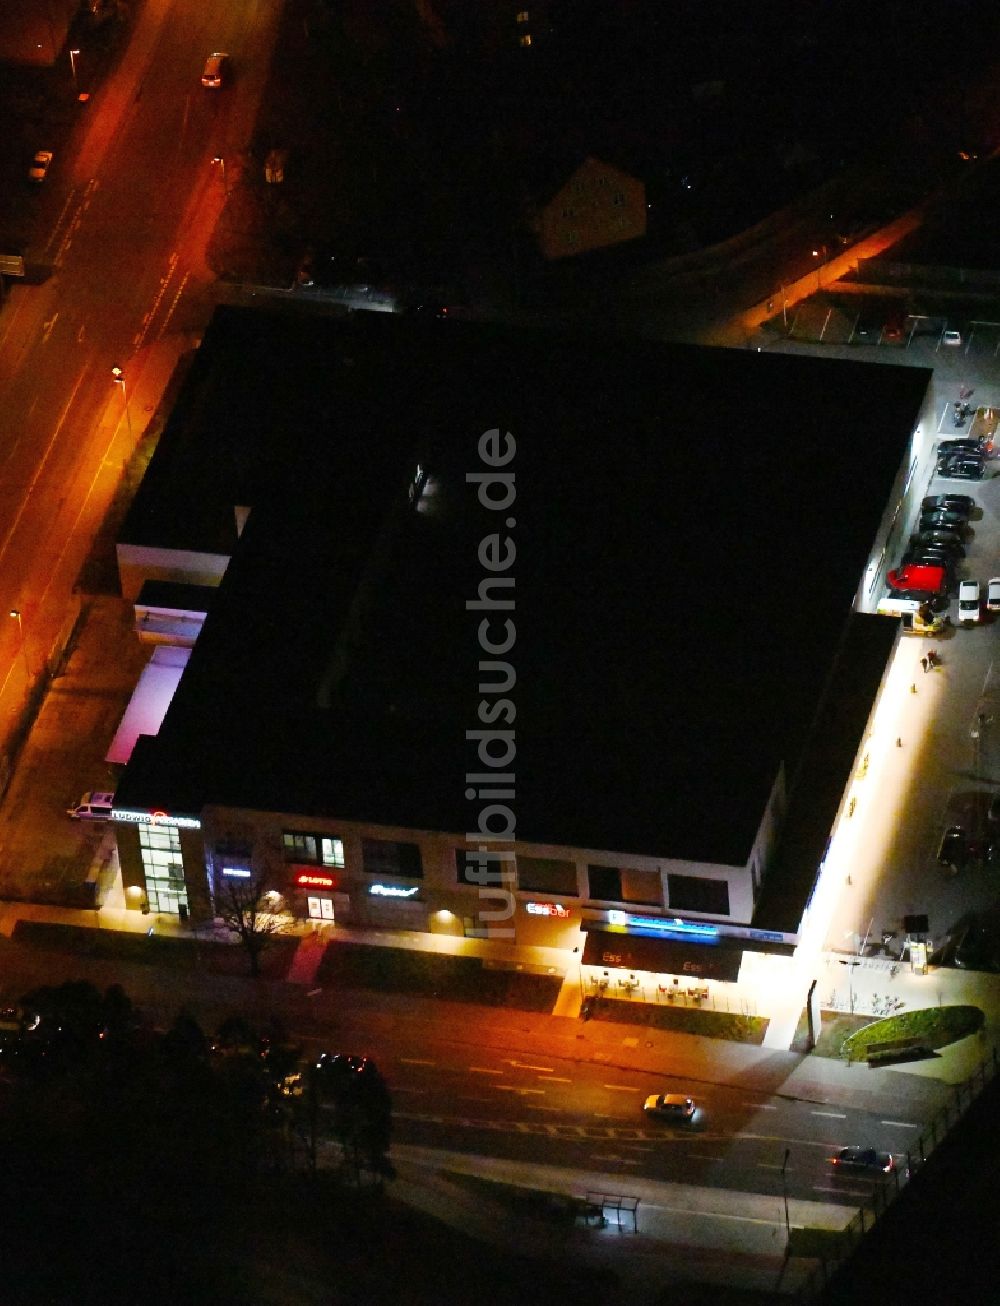 Nachtluftbild Ludwigsfelde - Nachtluftbild Einkaufs- Zentrum Ludwig Arkaden in Ludwigsfelde im Bundesland Brandenburg, Deutschland